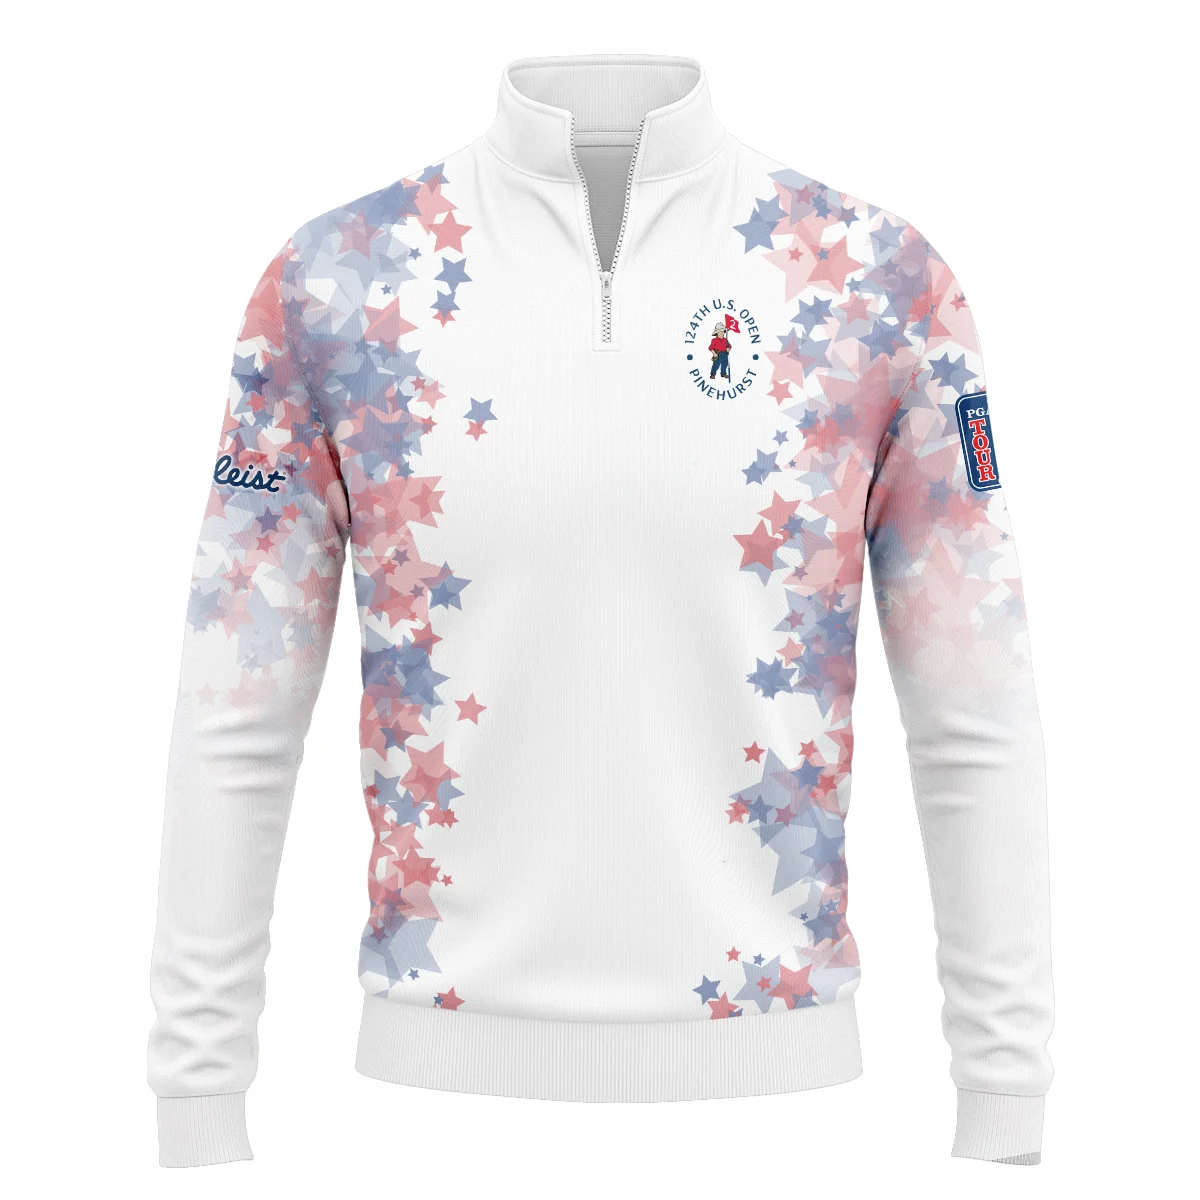 Special Version 124th U.S. Open Pinehurst Titleist Polo Shirt Coloured Stars Polo Shirt For Men